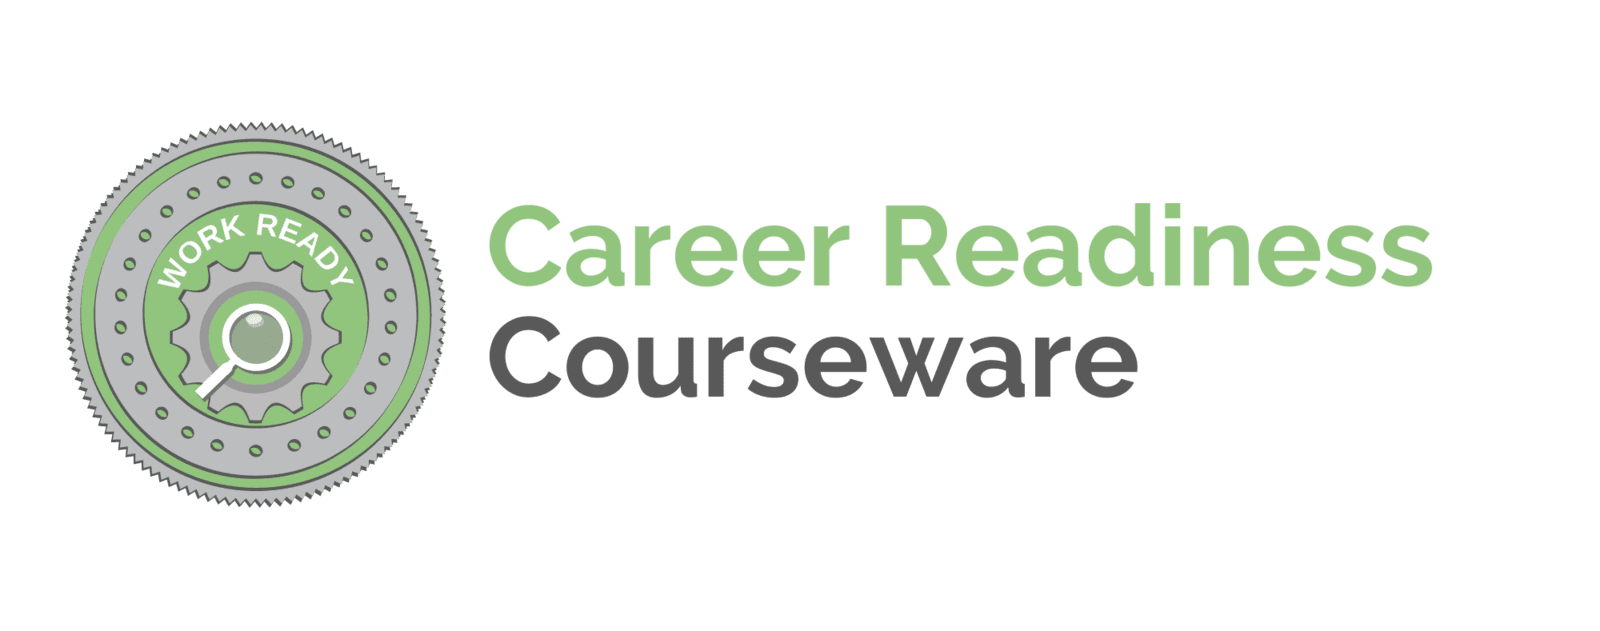 Career Readiness Courseware